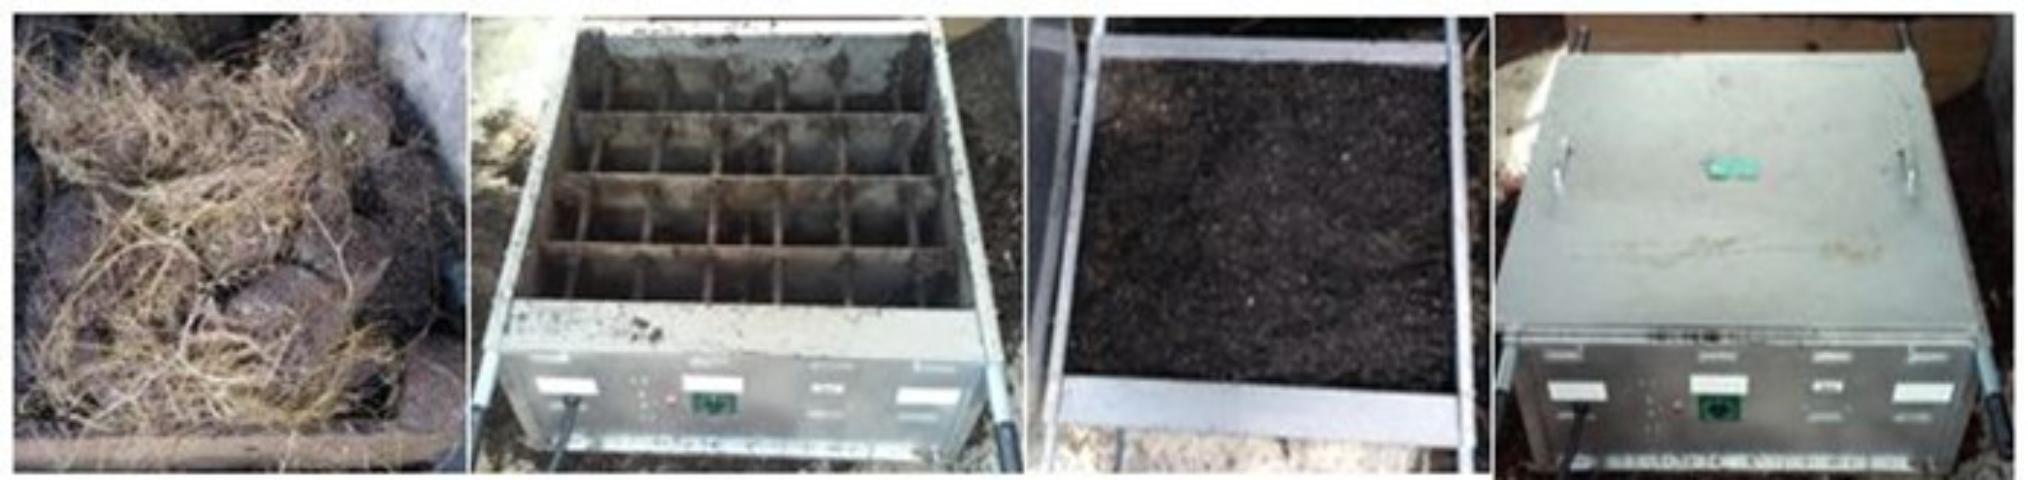 Figure 1. Sterilizing used potting medium in an electric Pro-Grow™ soil sterilizer.